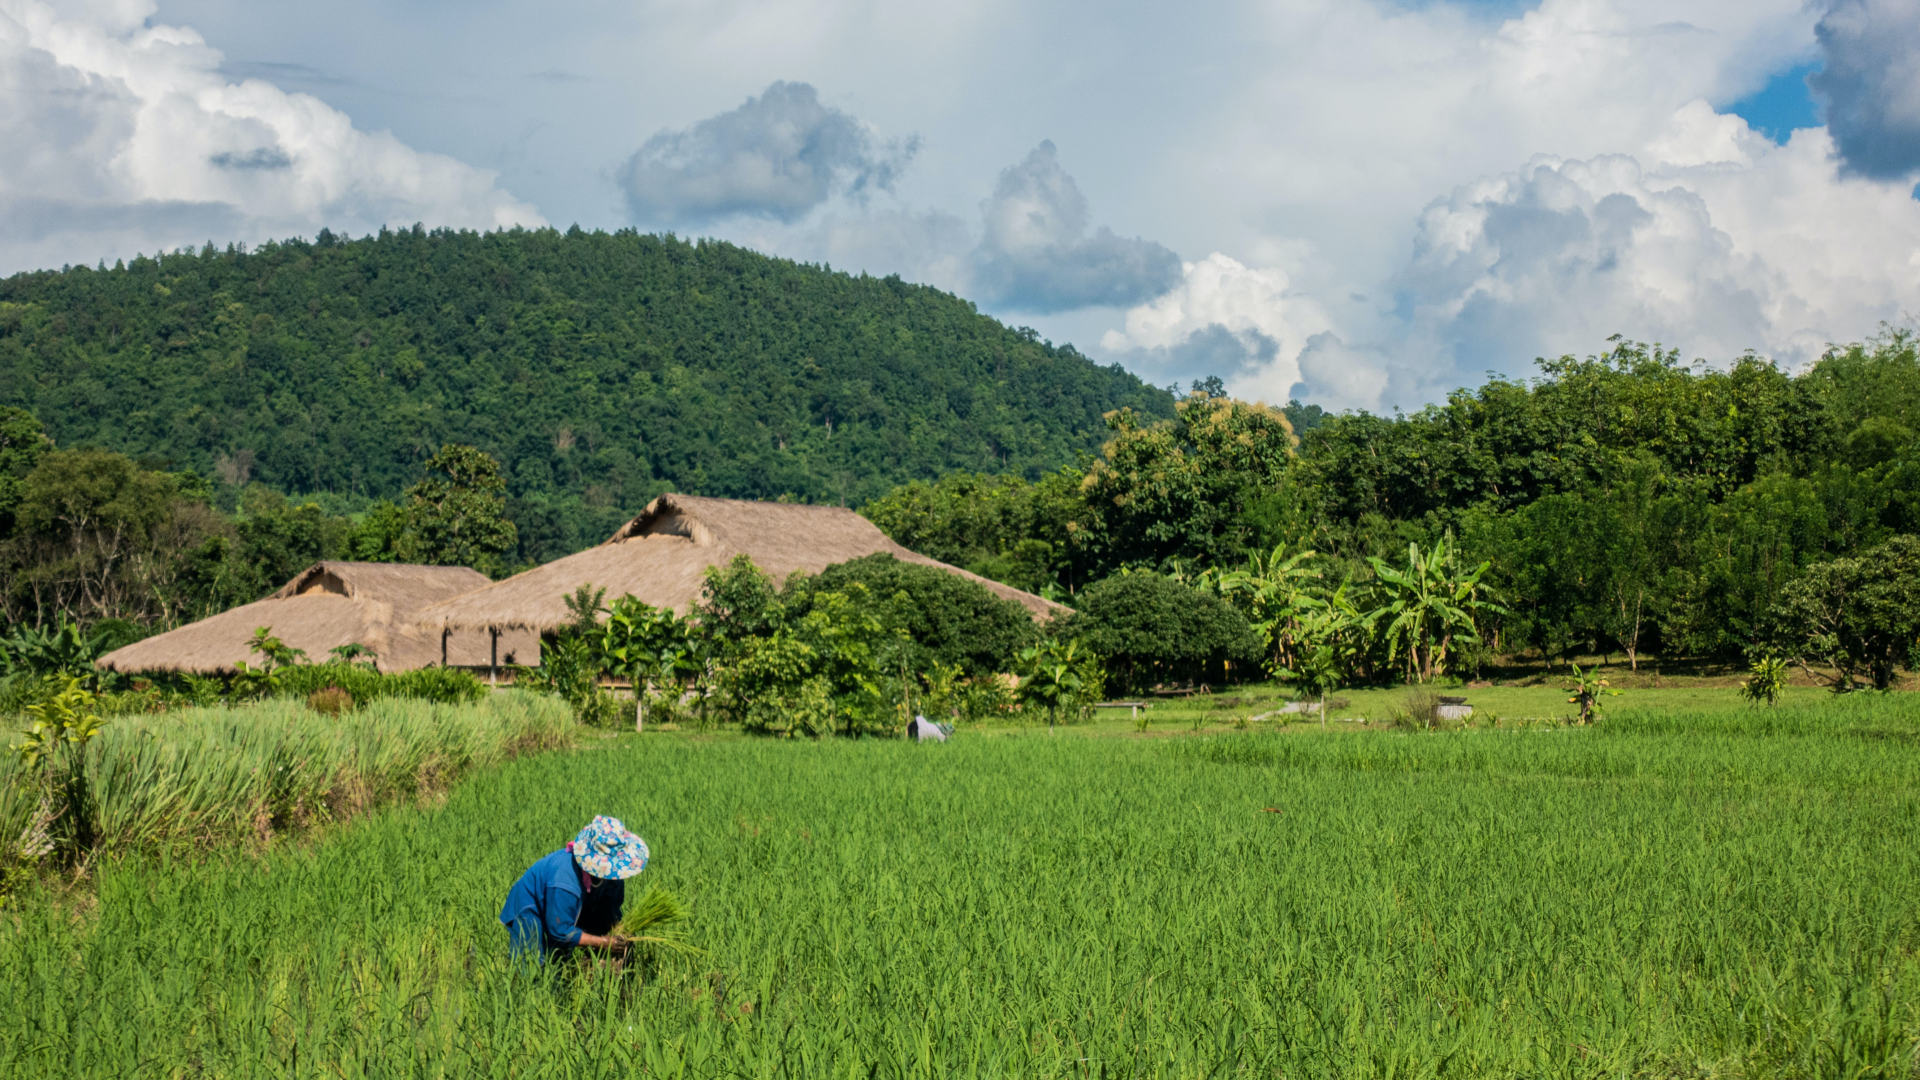 Custom Travel Planner Network-Thailand-Change Mai-Rice Farming-dennis-rochel-nd2P5OkWkMs-unsplash